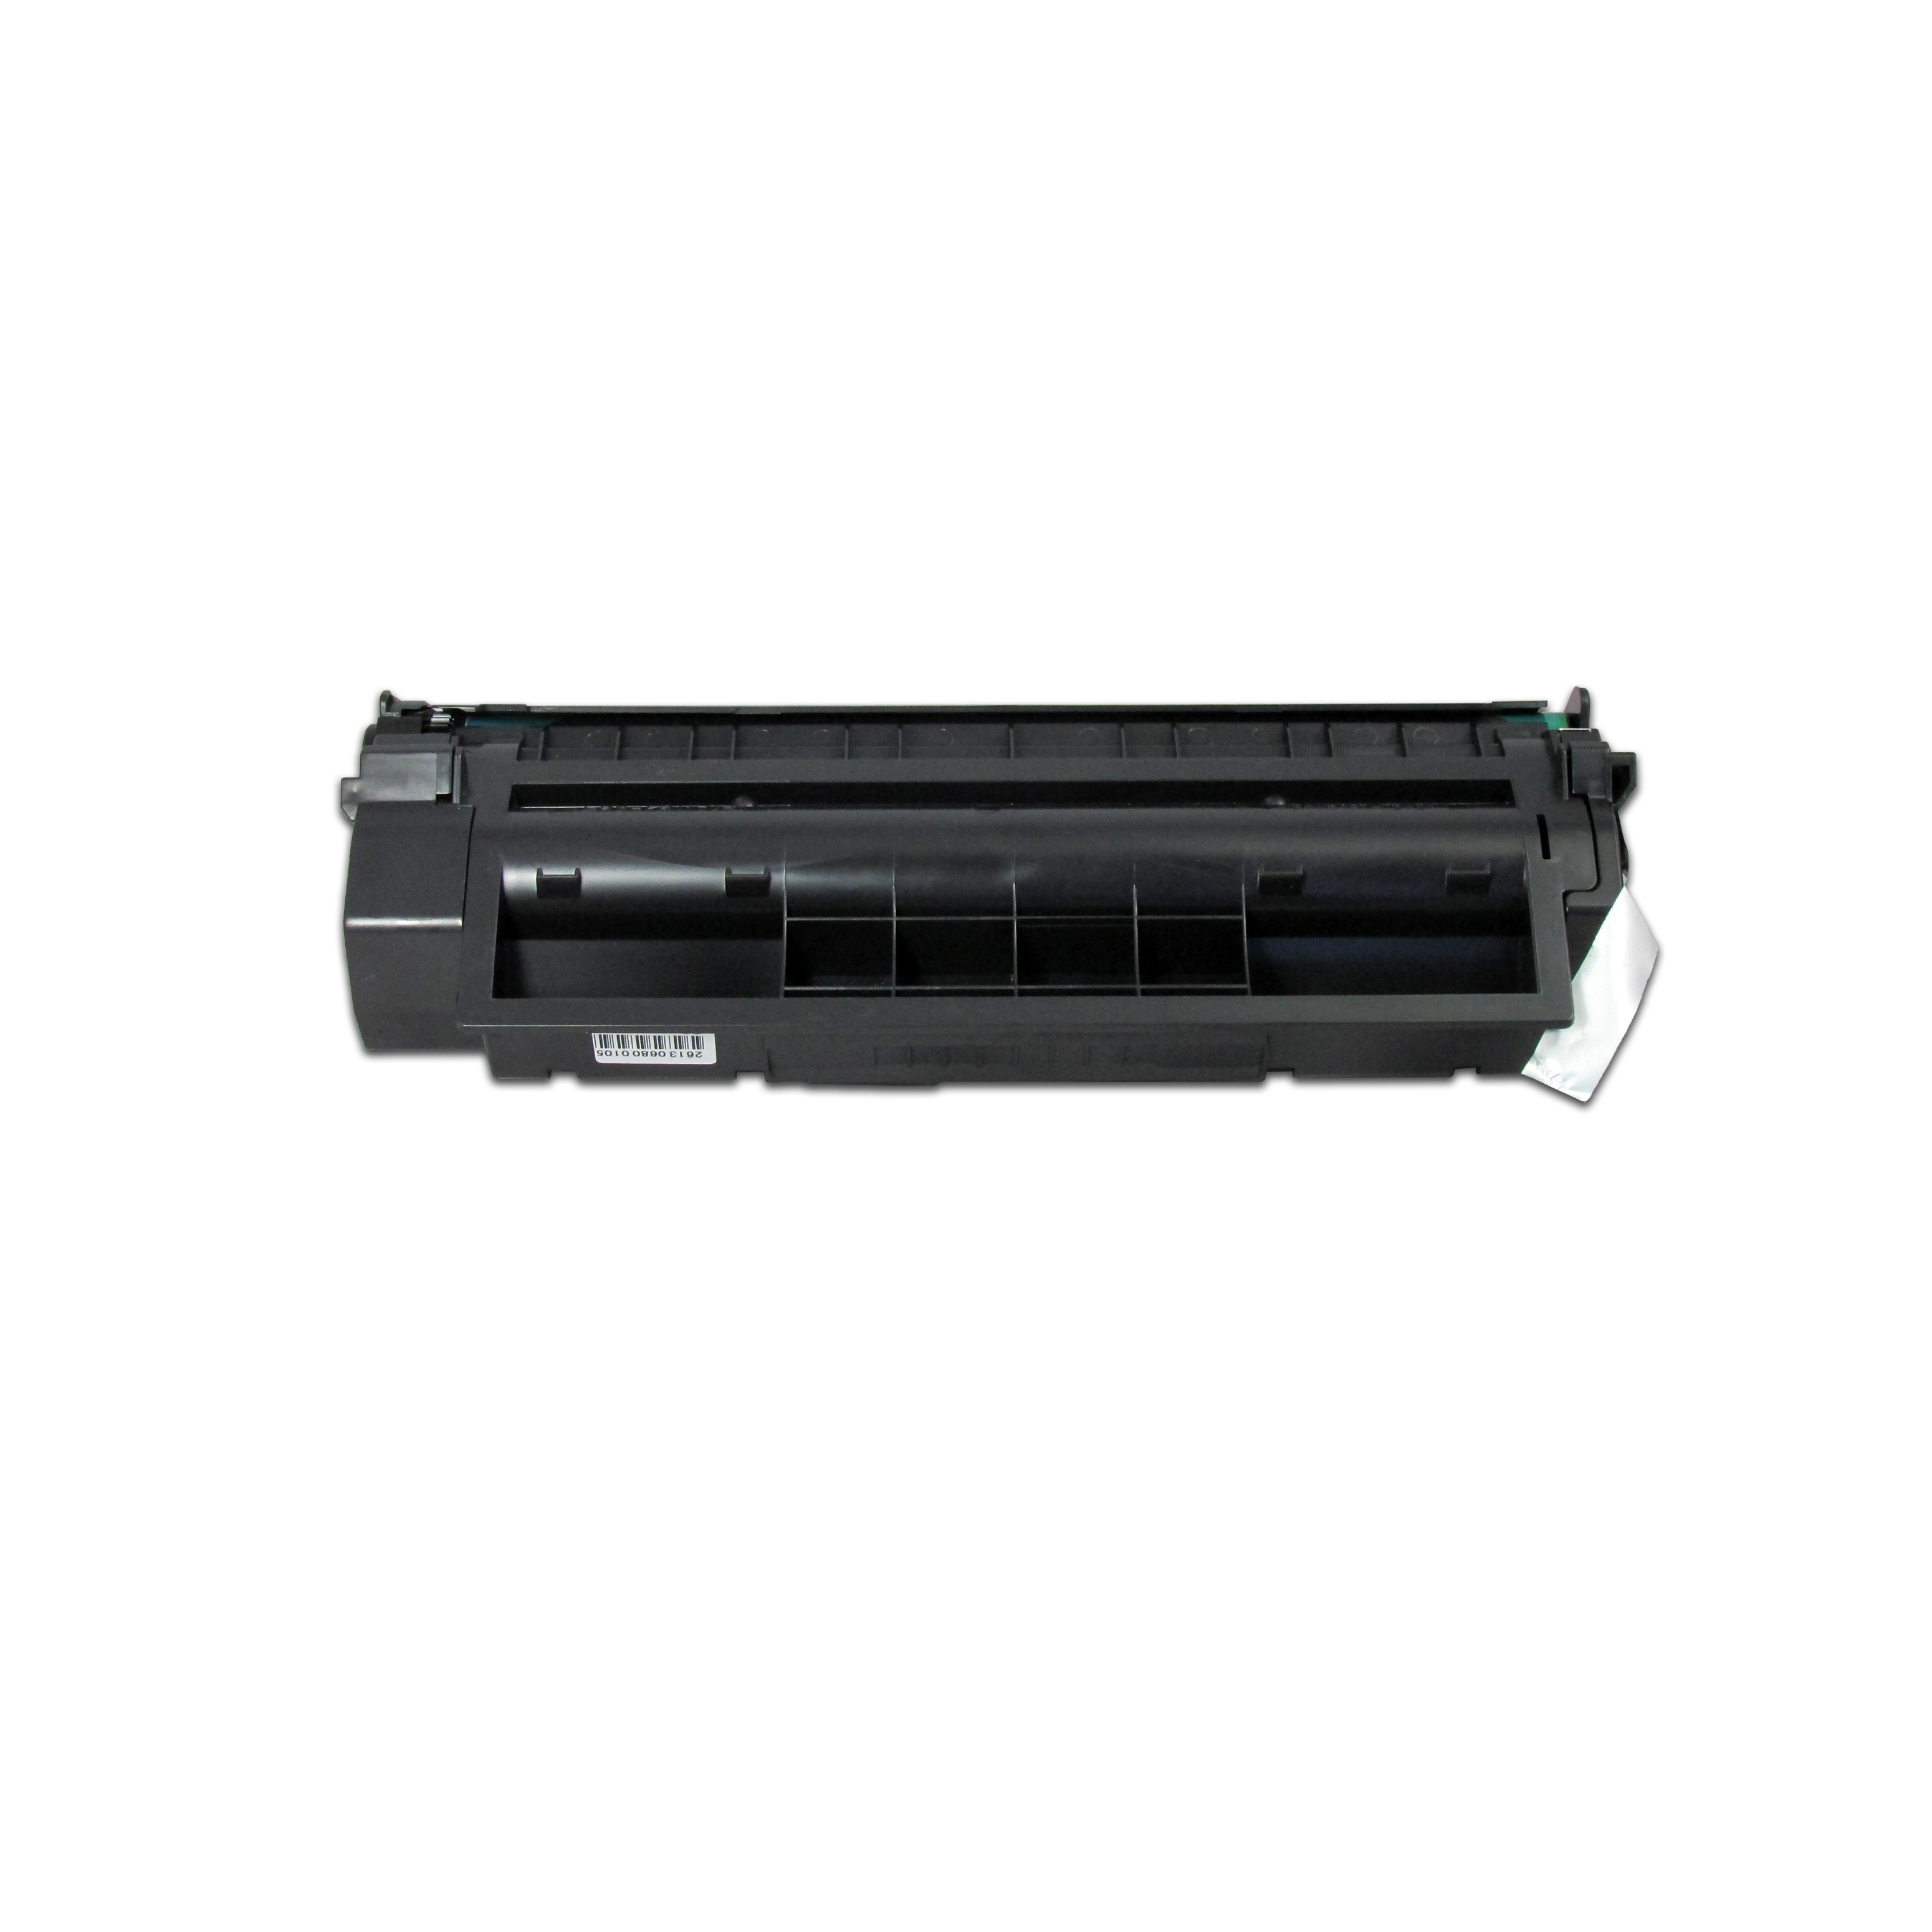 Q2613A  toner cartridge Use For 1300/1300N/1300XI